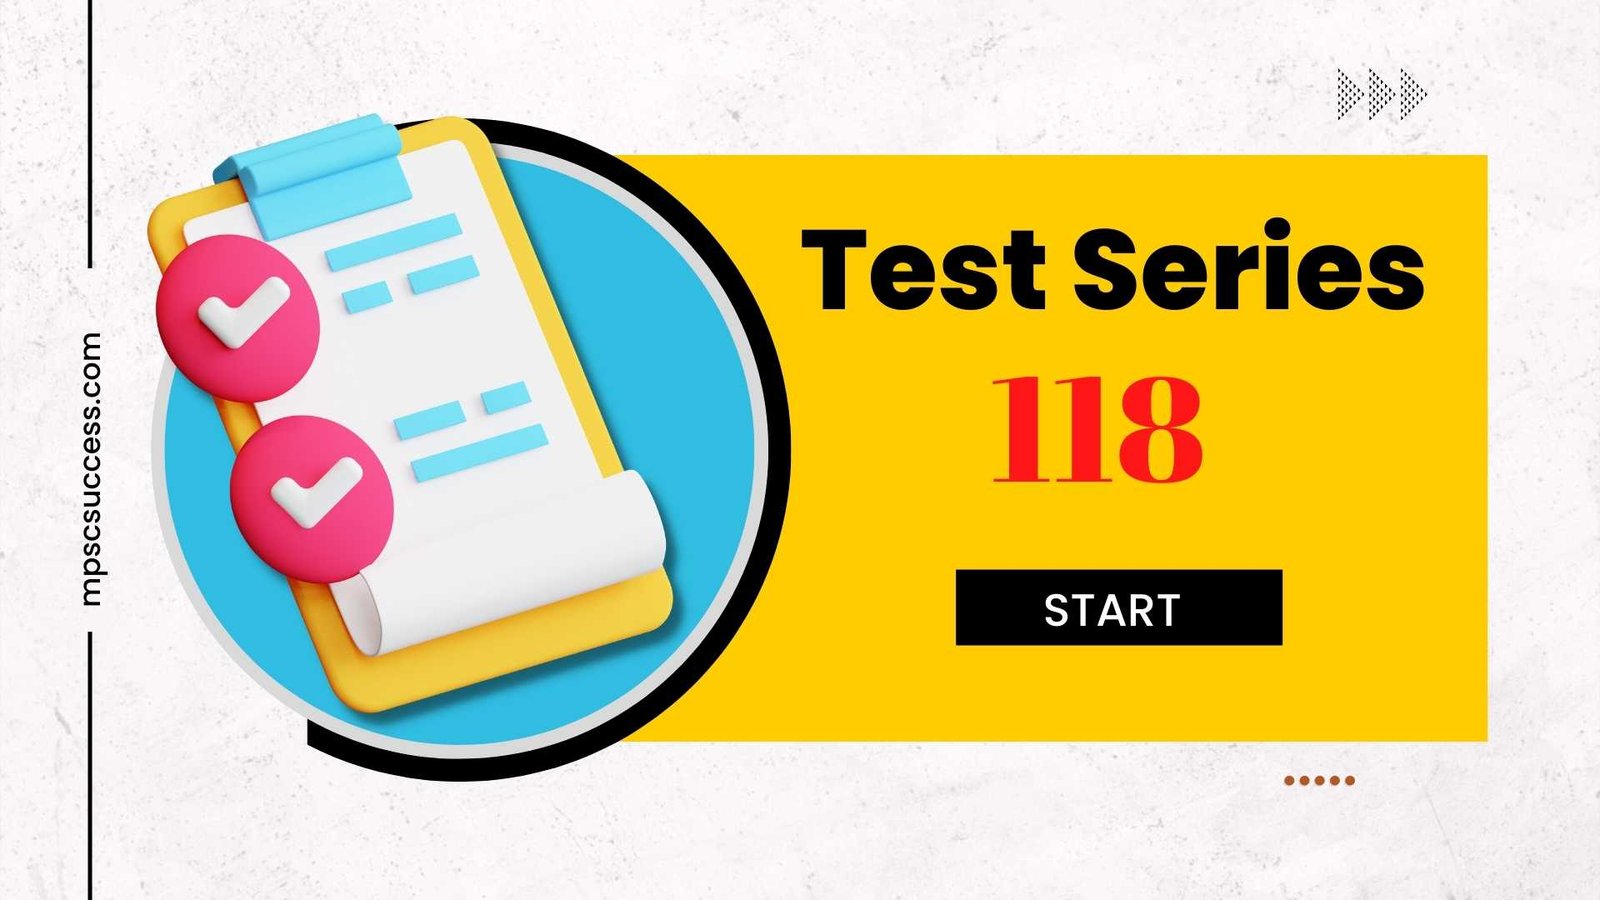 test series 118